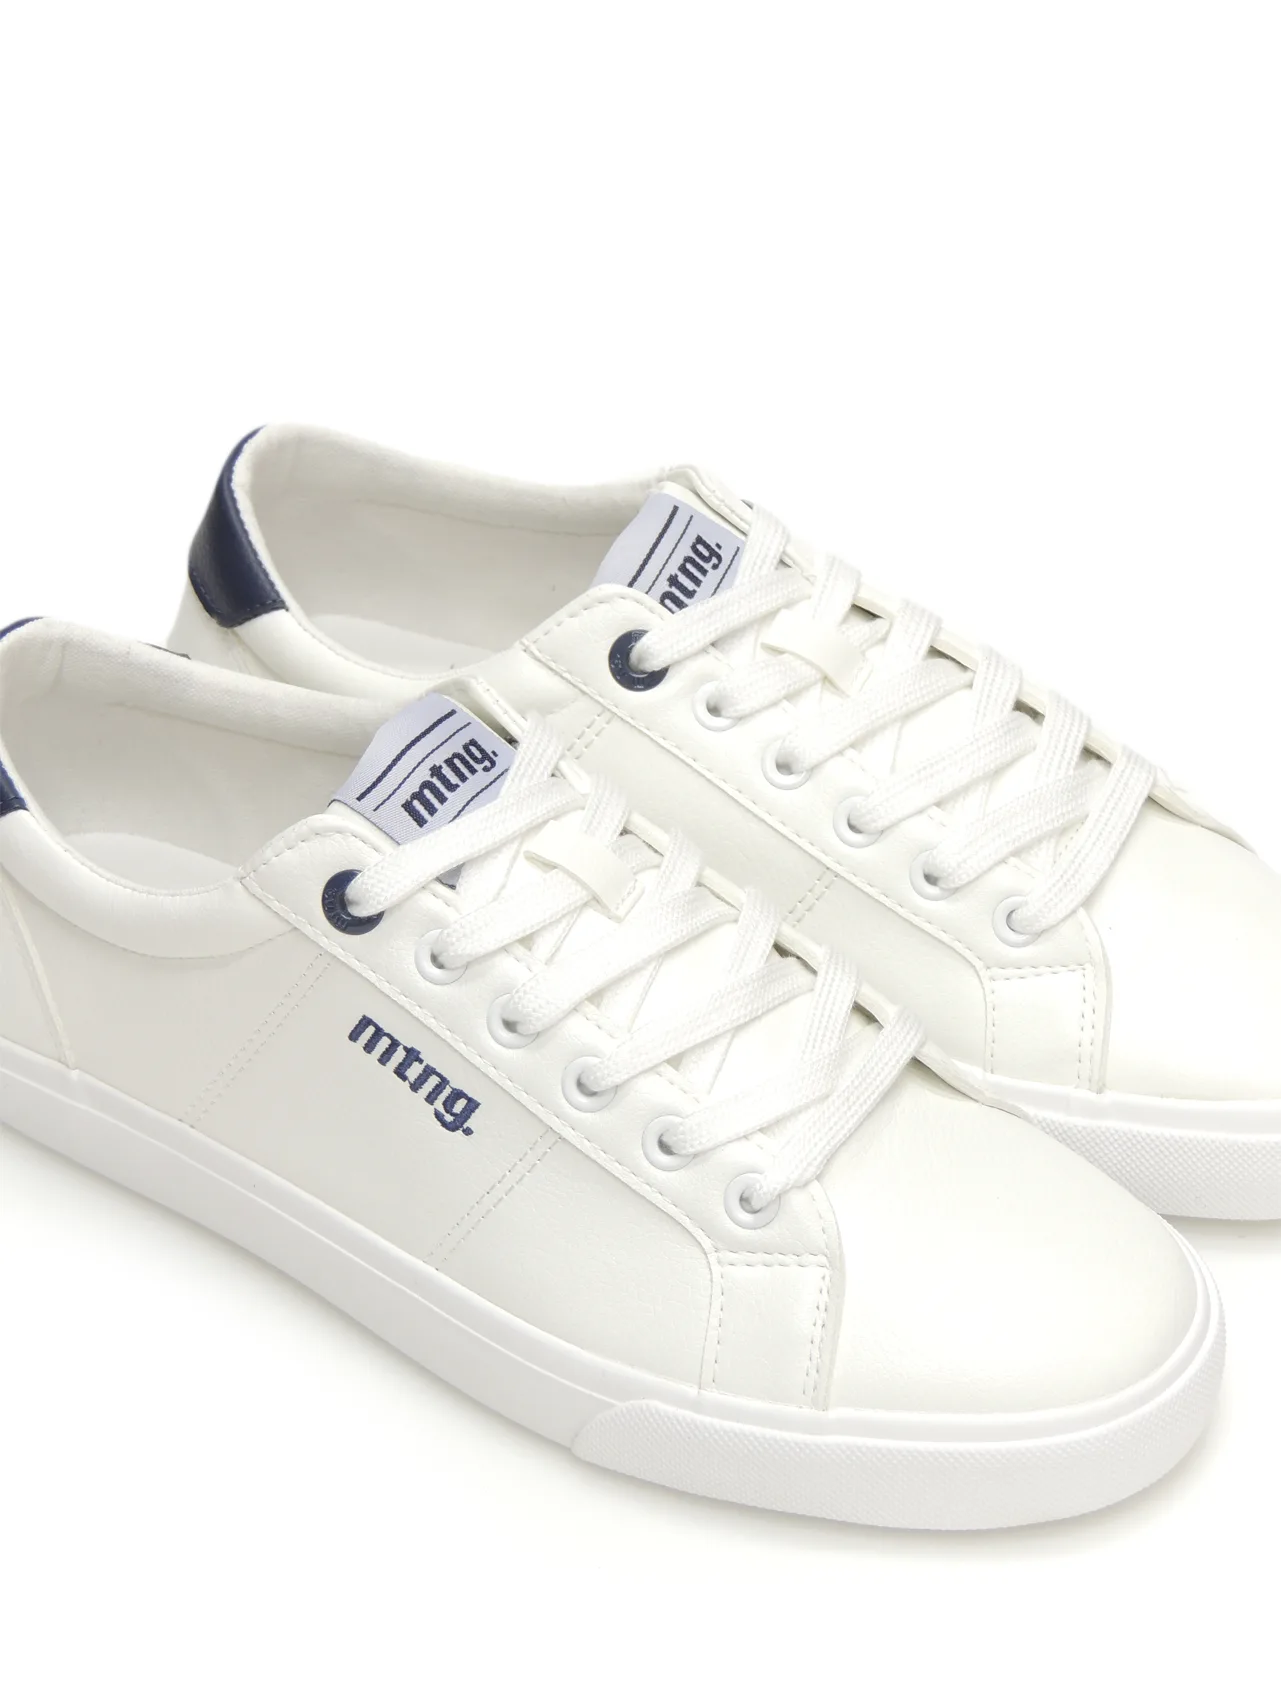 sneakers--mustang-84732-polipiel-blanco